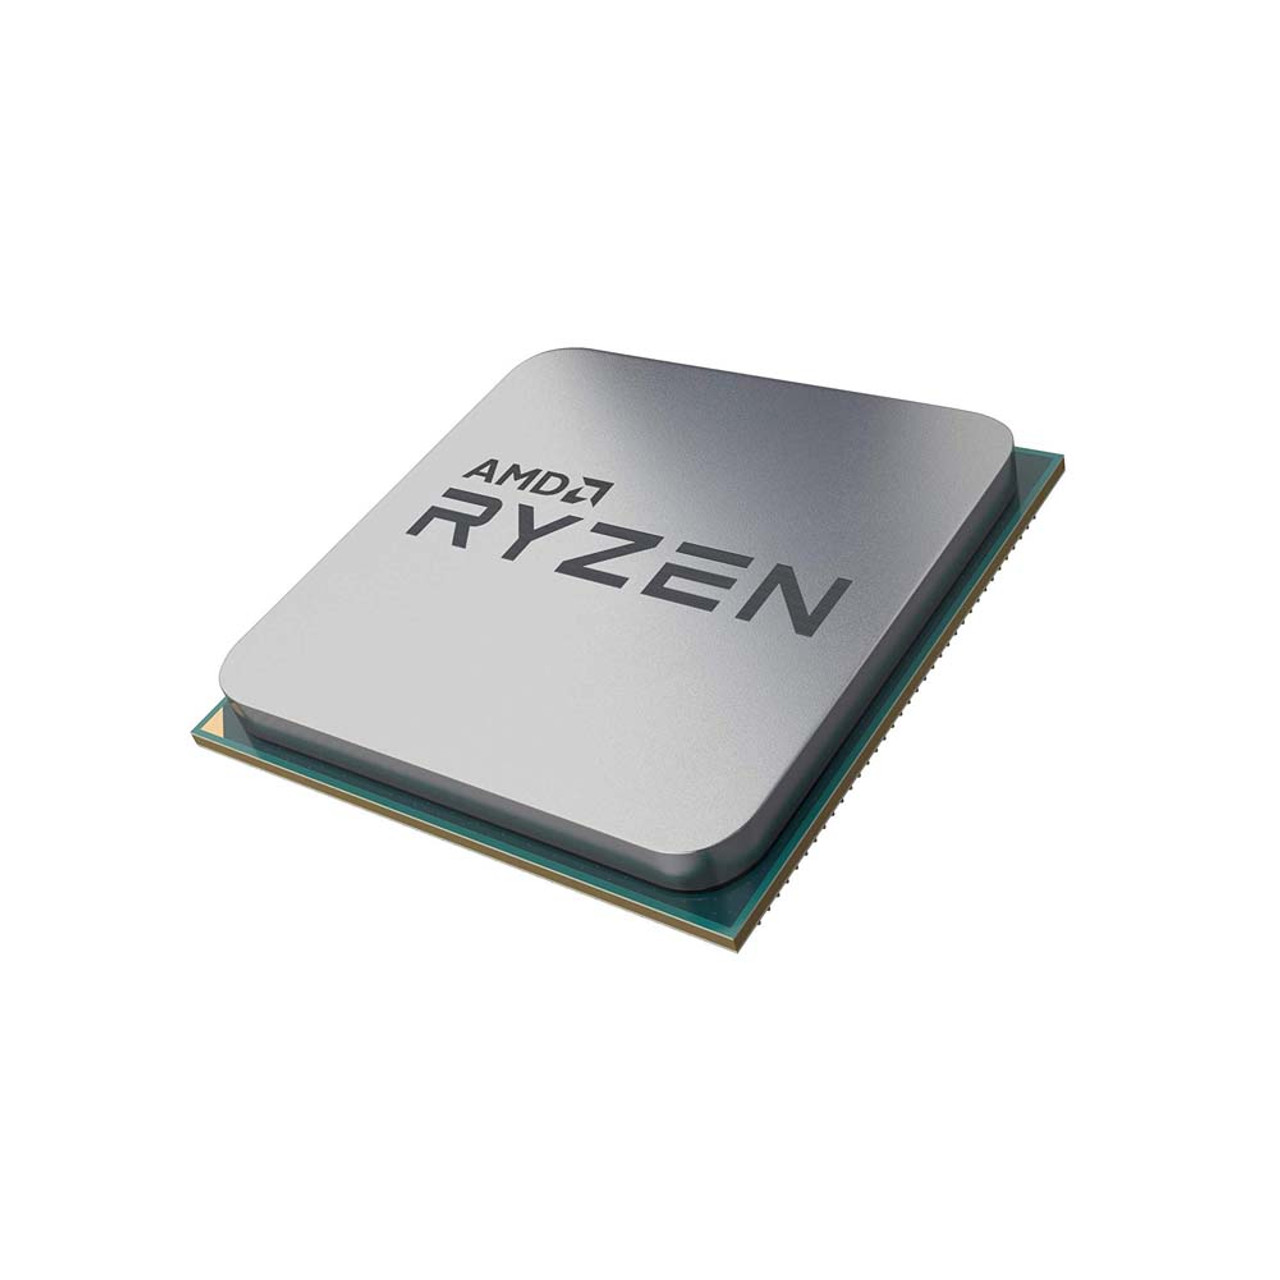 AMD YD3200C5FHBOX Ryzen 3 3200G 4-Core AM4 Unlocked Desktop Processor with Radeon Graphics